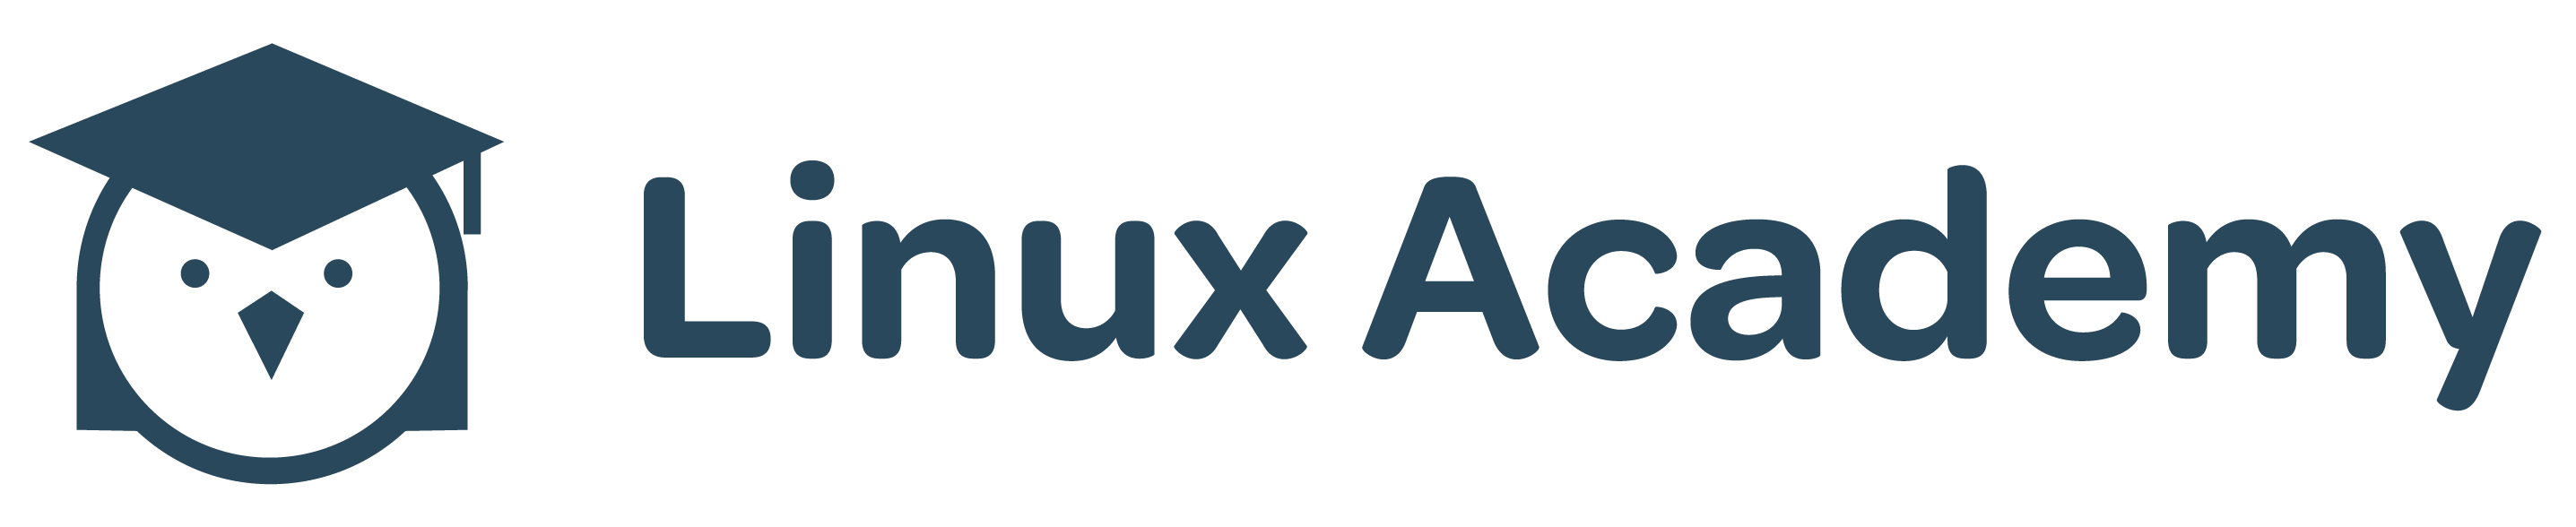 Linux-Academy_logo